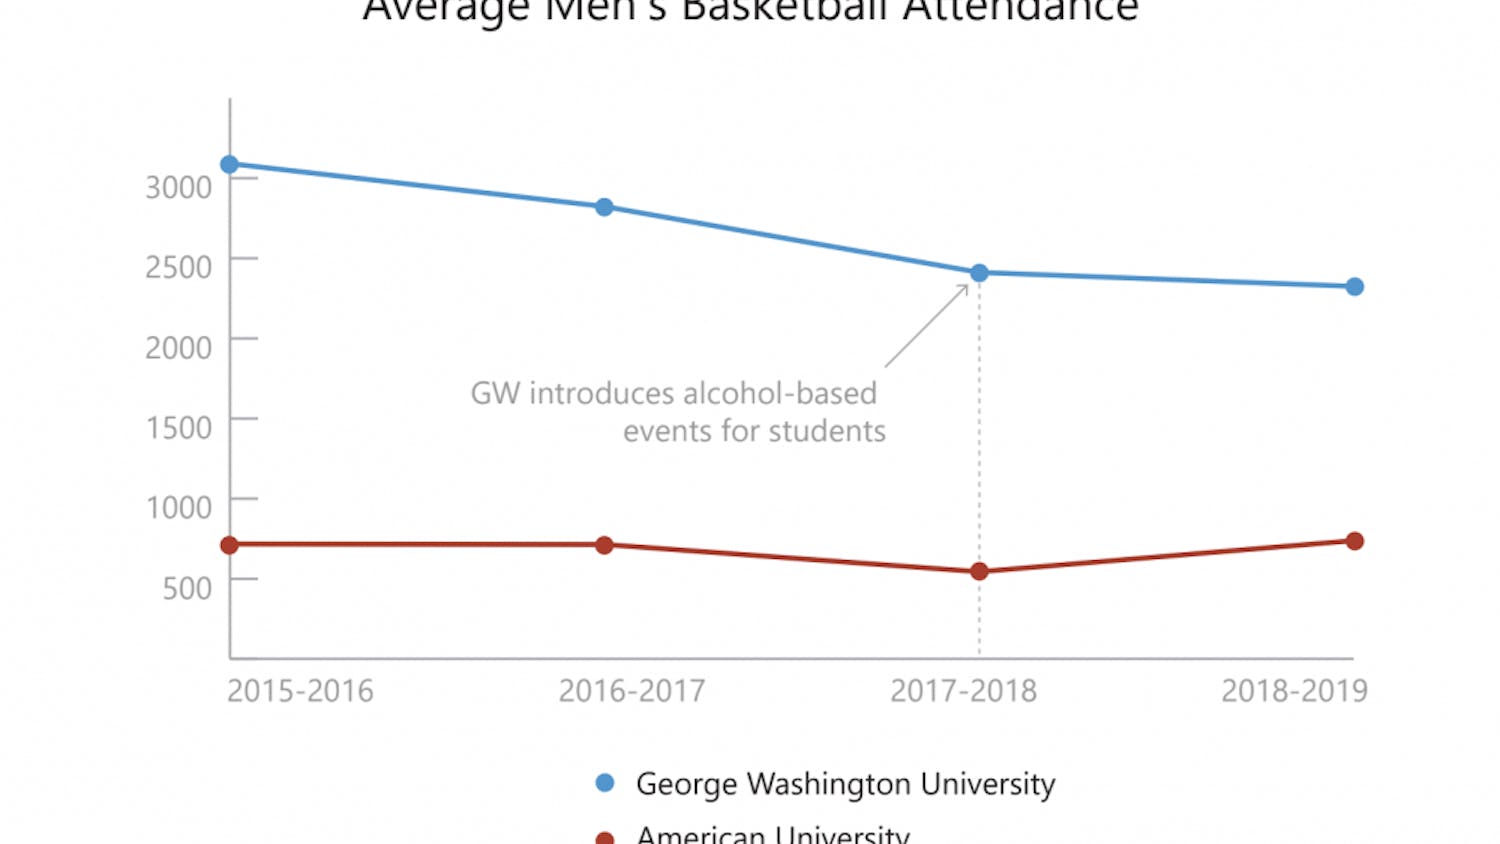 Basketball Attendance Graphic